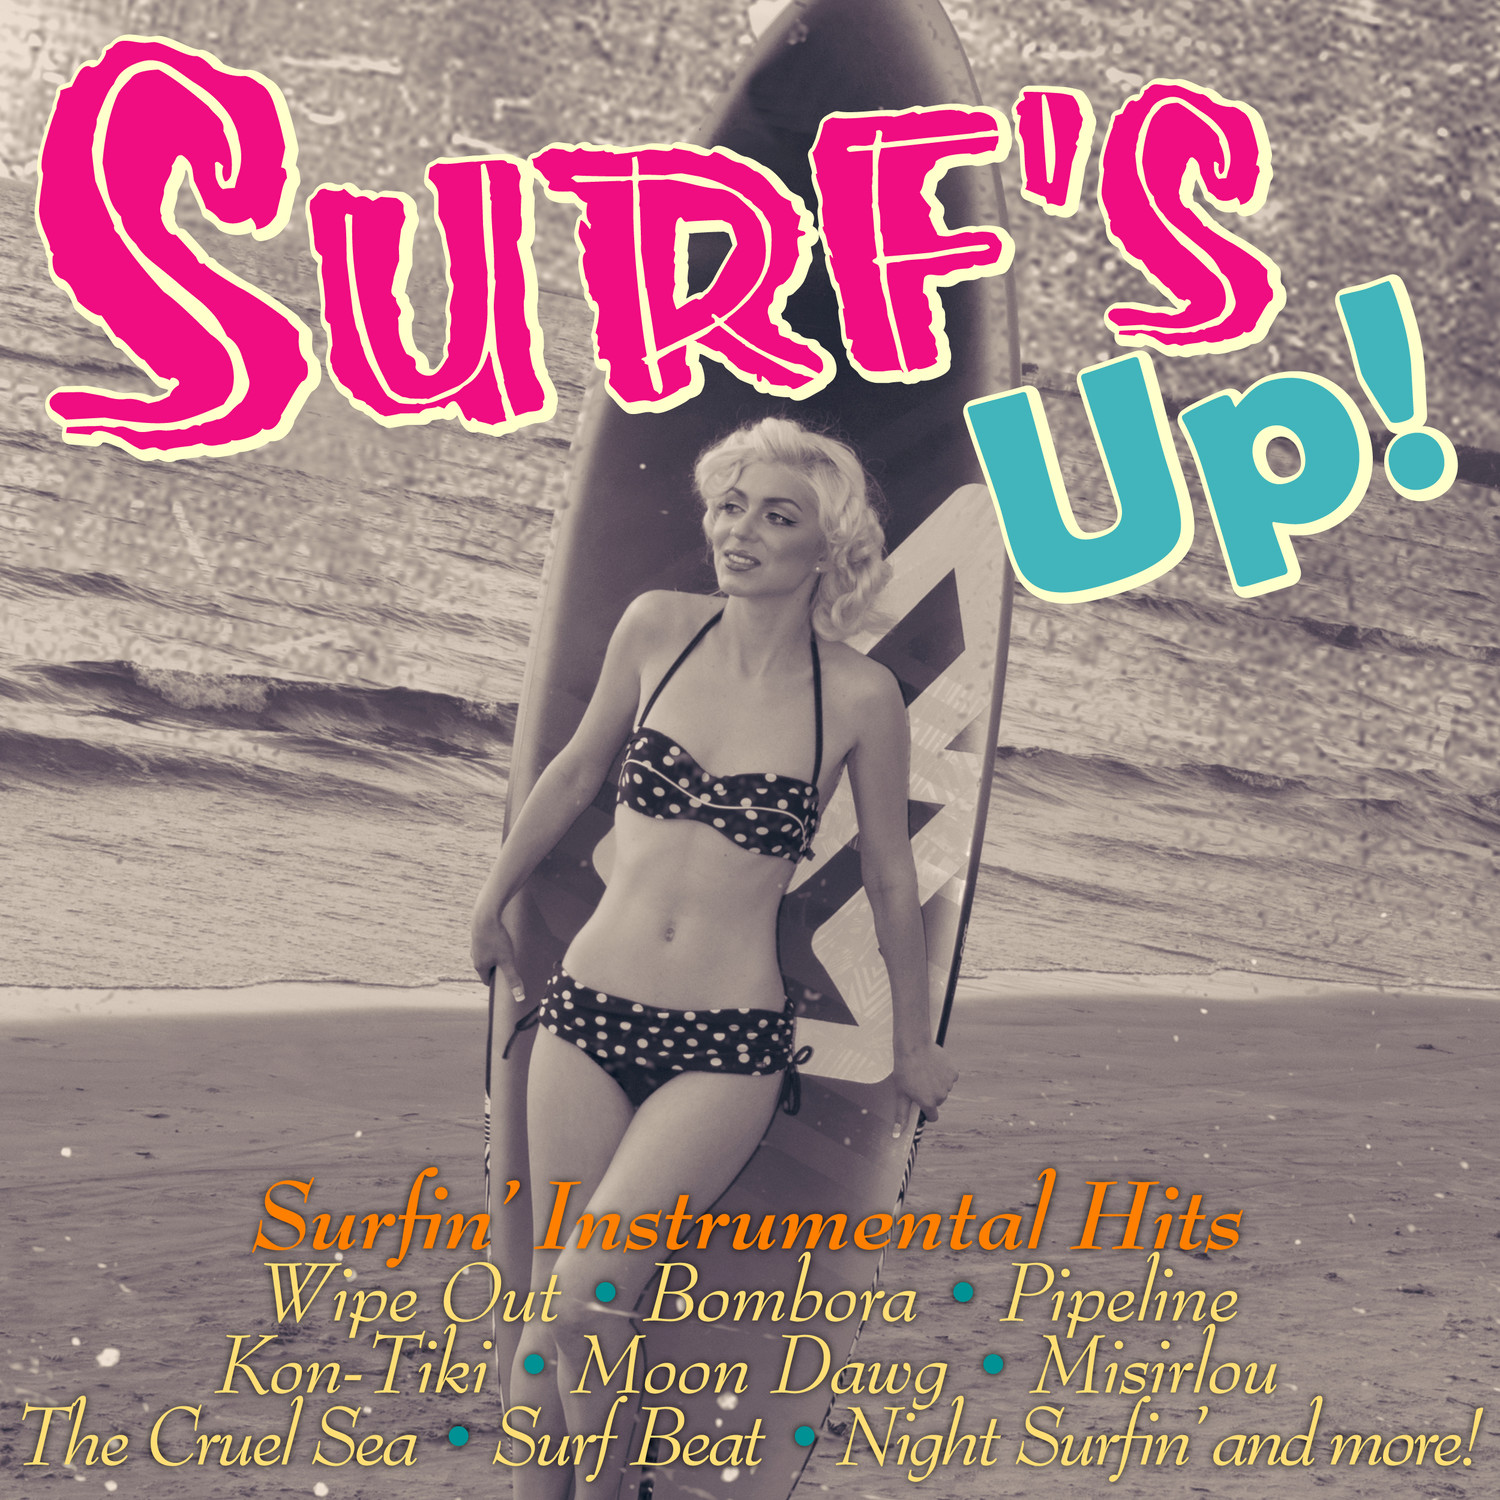 Wipe Out: Great Surfin' Instrumentals